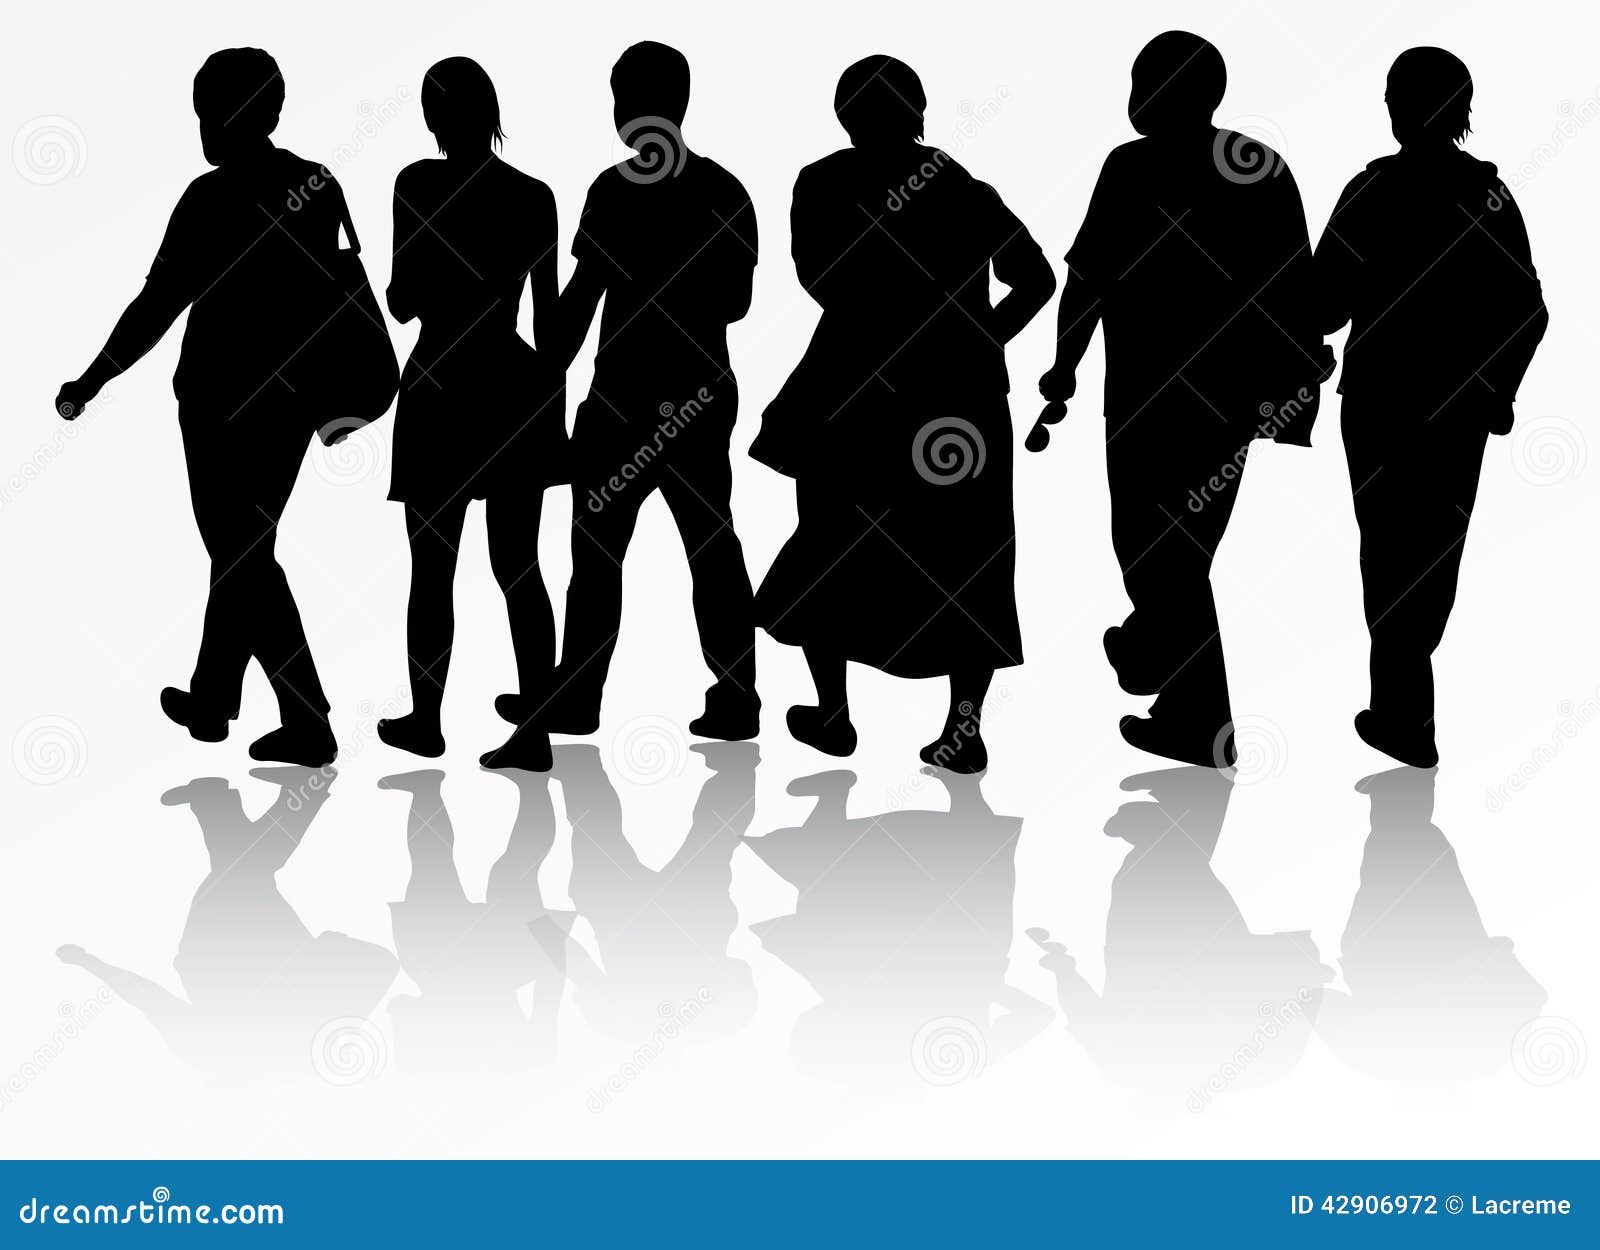 People silhouettes stock vector. Illustration of senior - 42906972